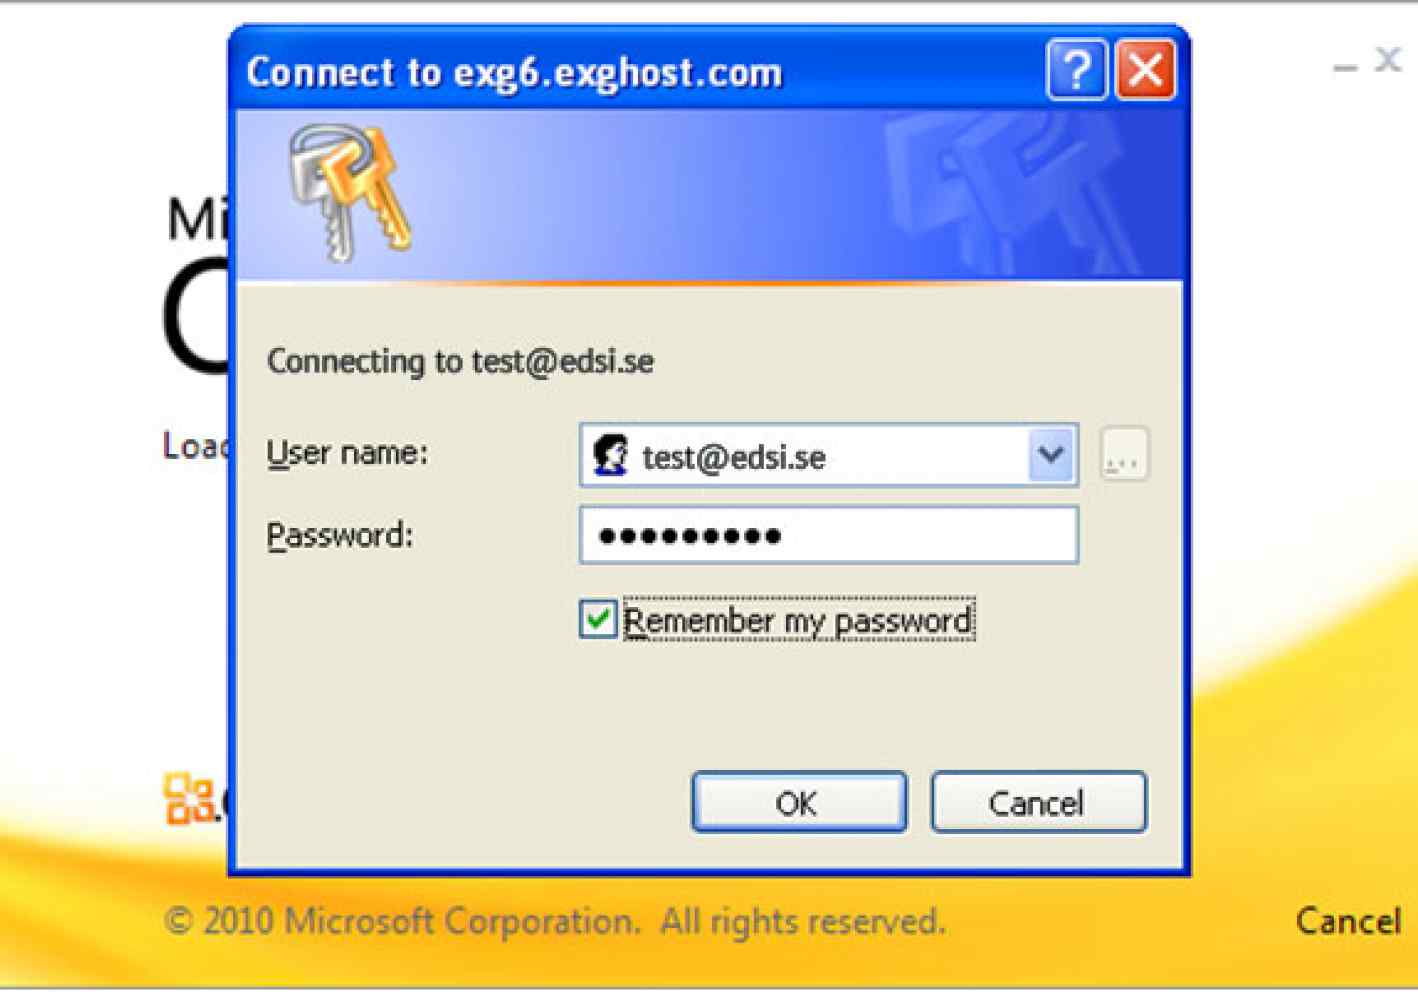 MS Outlook Password Dialog